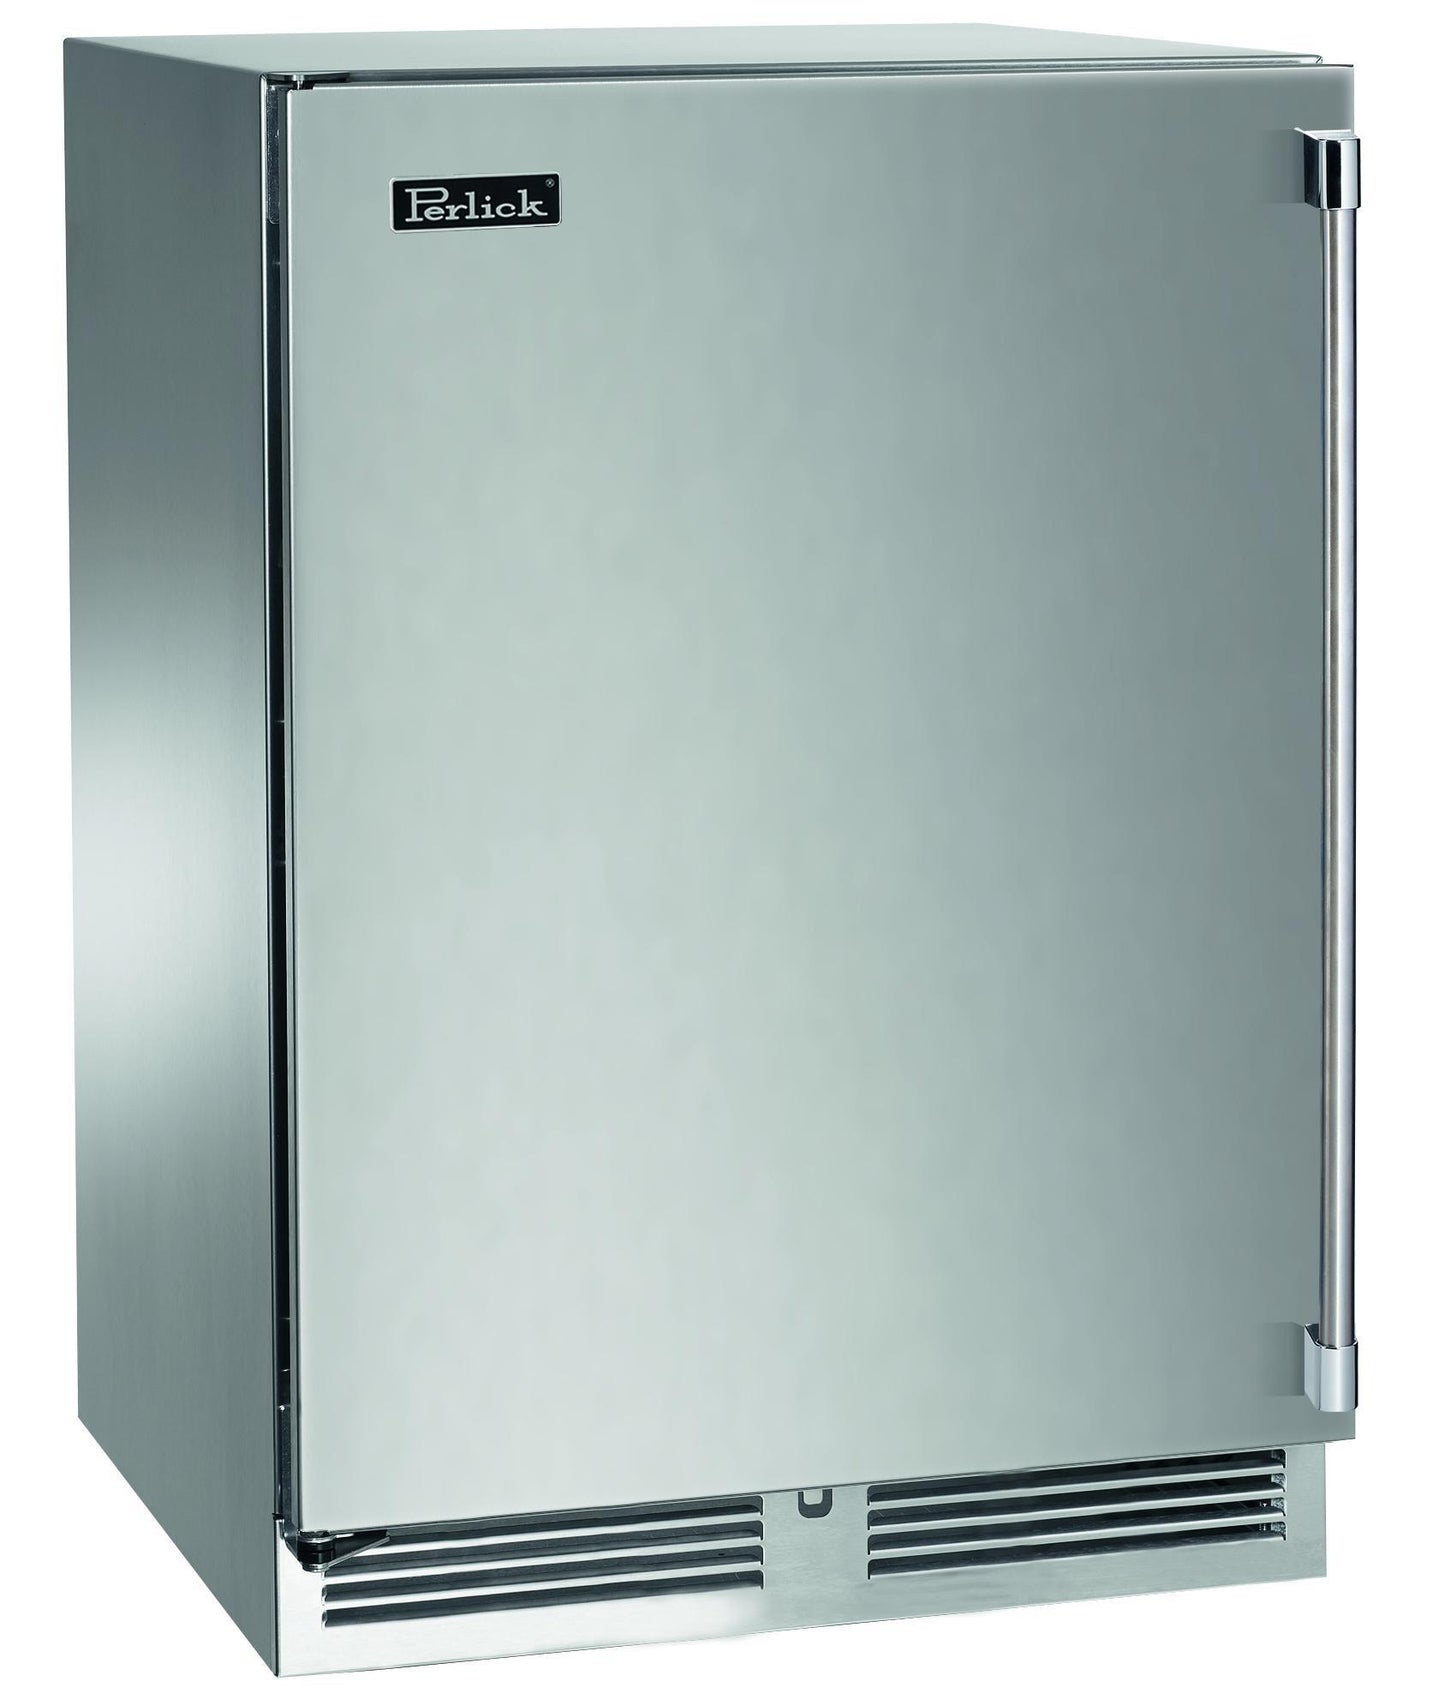 Perlick HP24CS41R 24" Dual-Zone Refrigerator/Wine Reserve